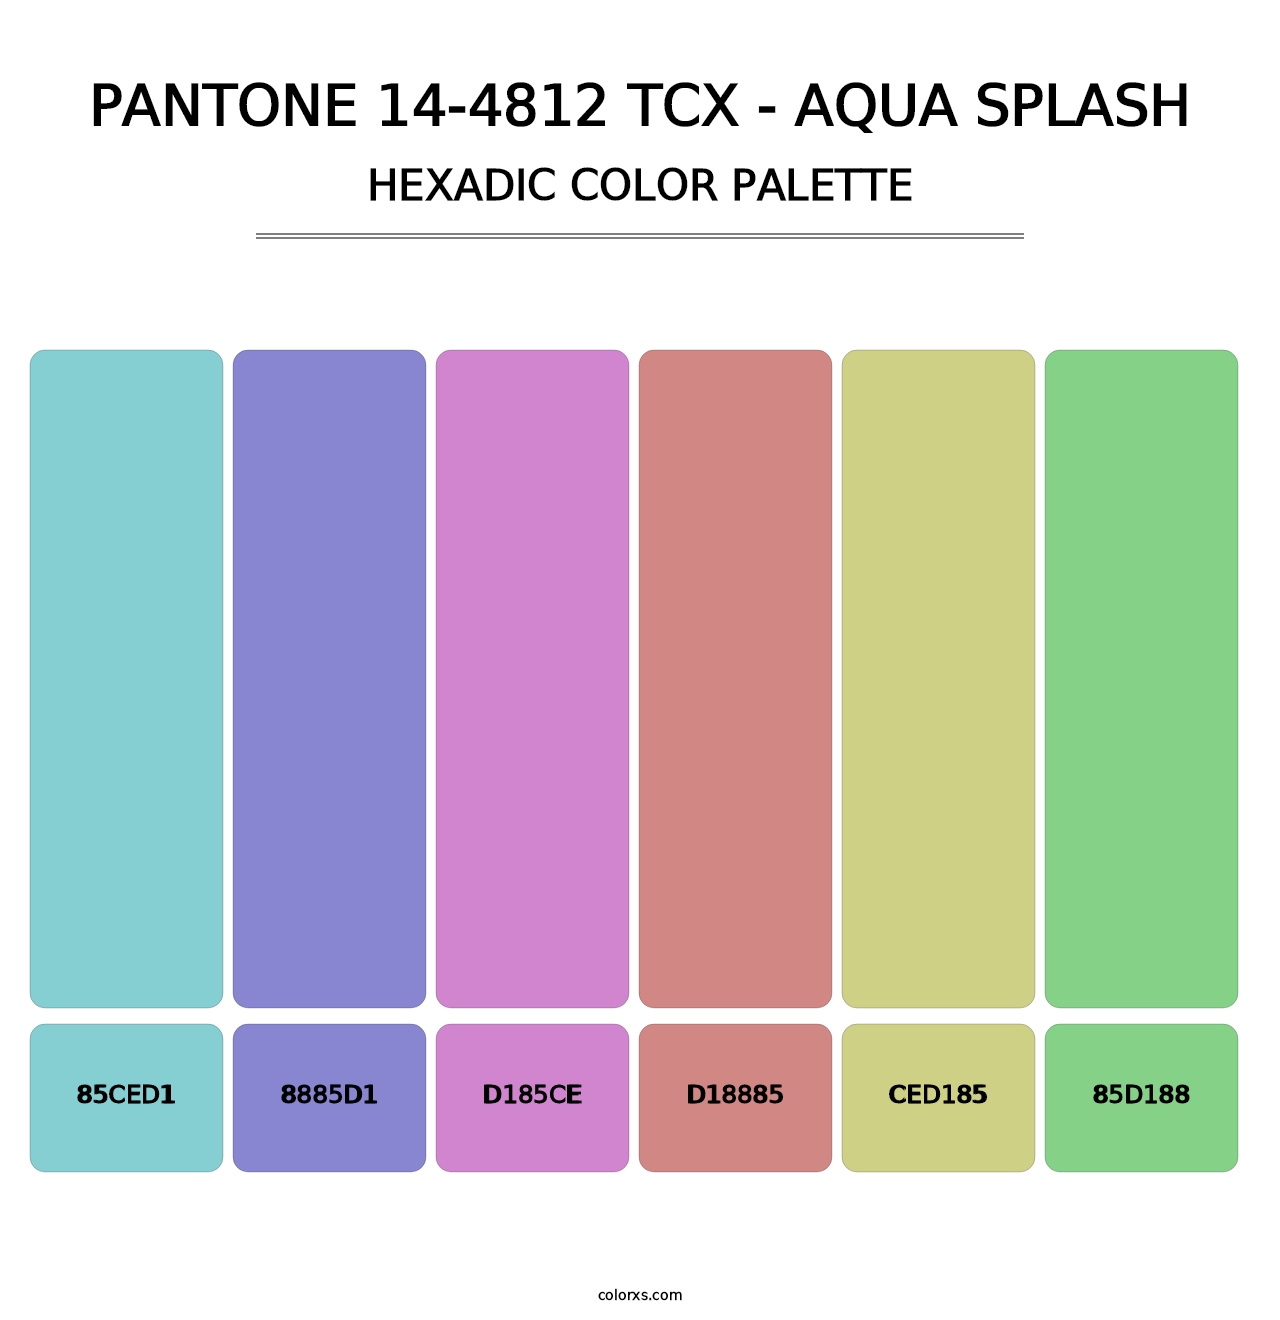 PANTONE 14-4812 TCX - Aqua Splash - Hexadic Color Palette